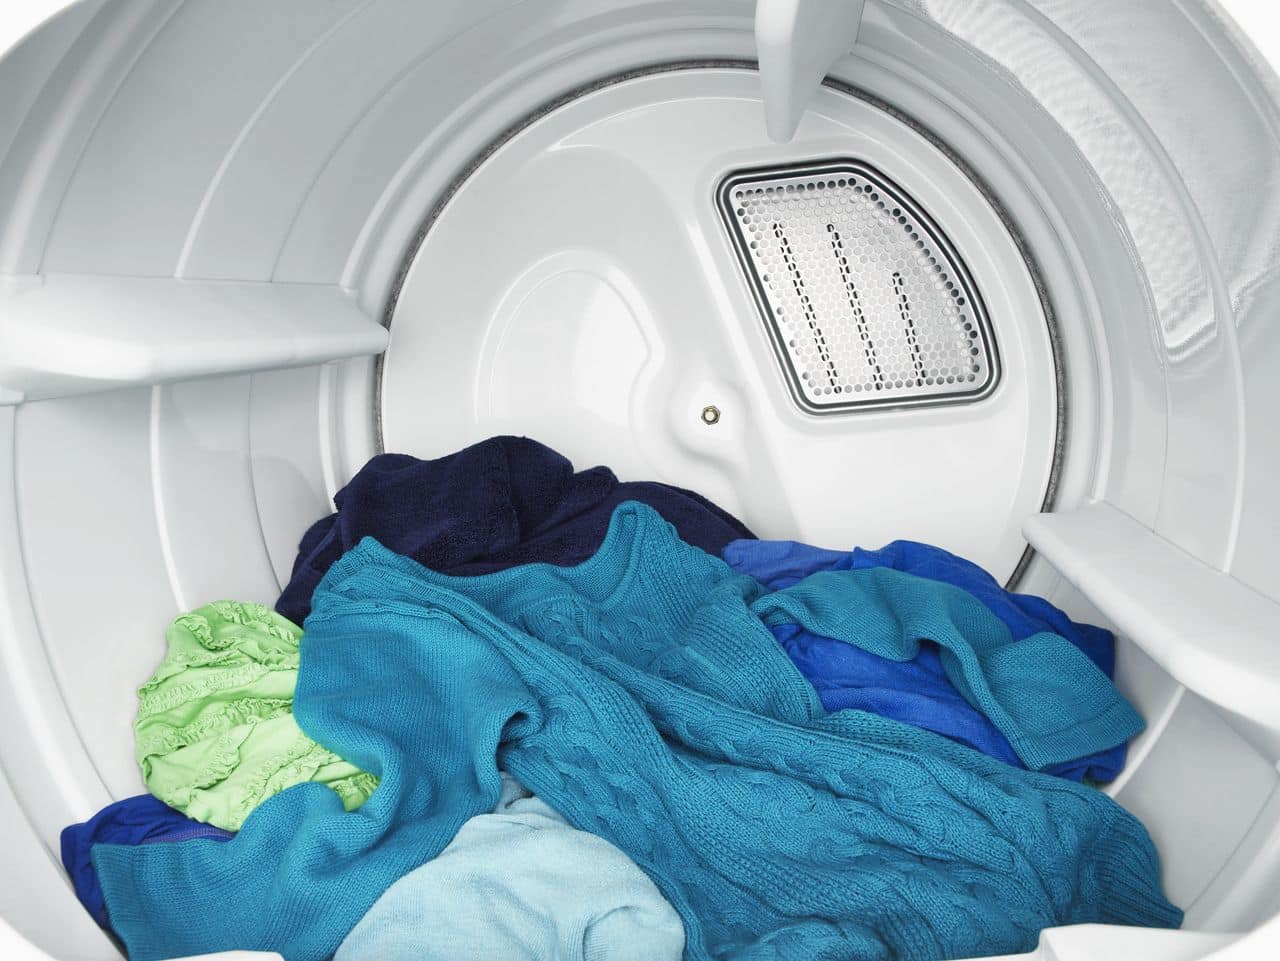 jul Med det samme Ledig How To Prevent Clothes From Shrinking In The Dryer - Fred's Appliance